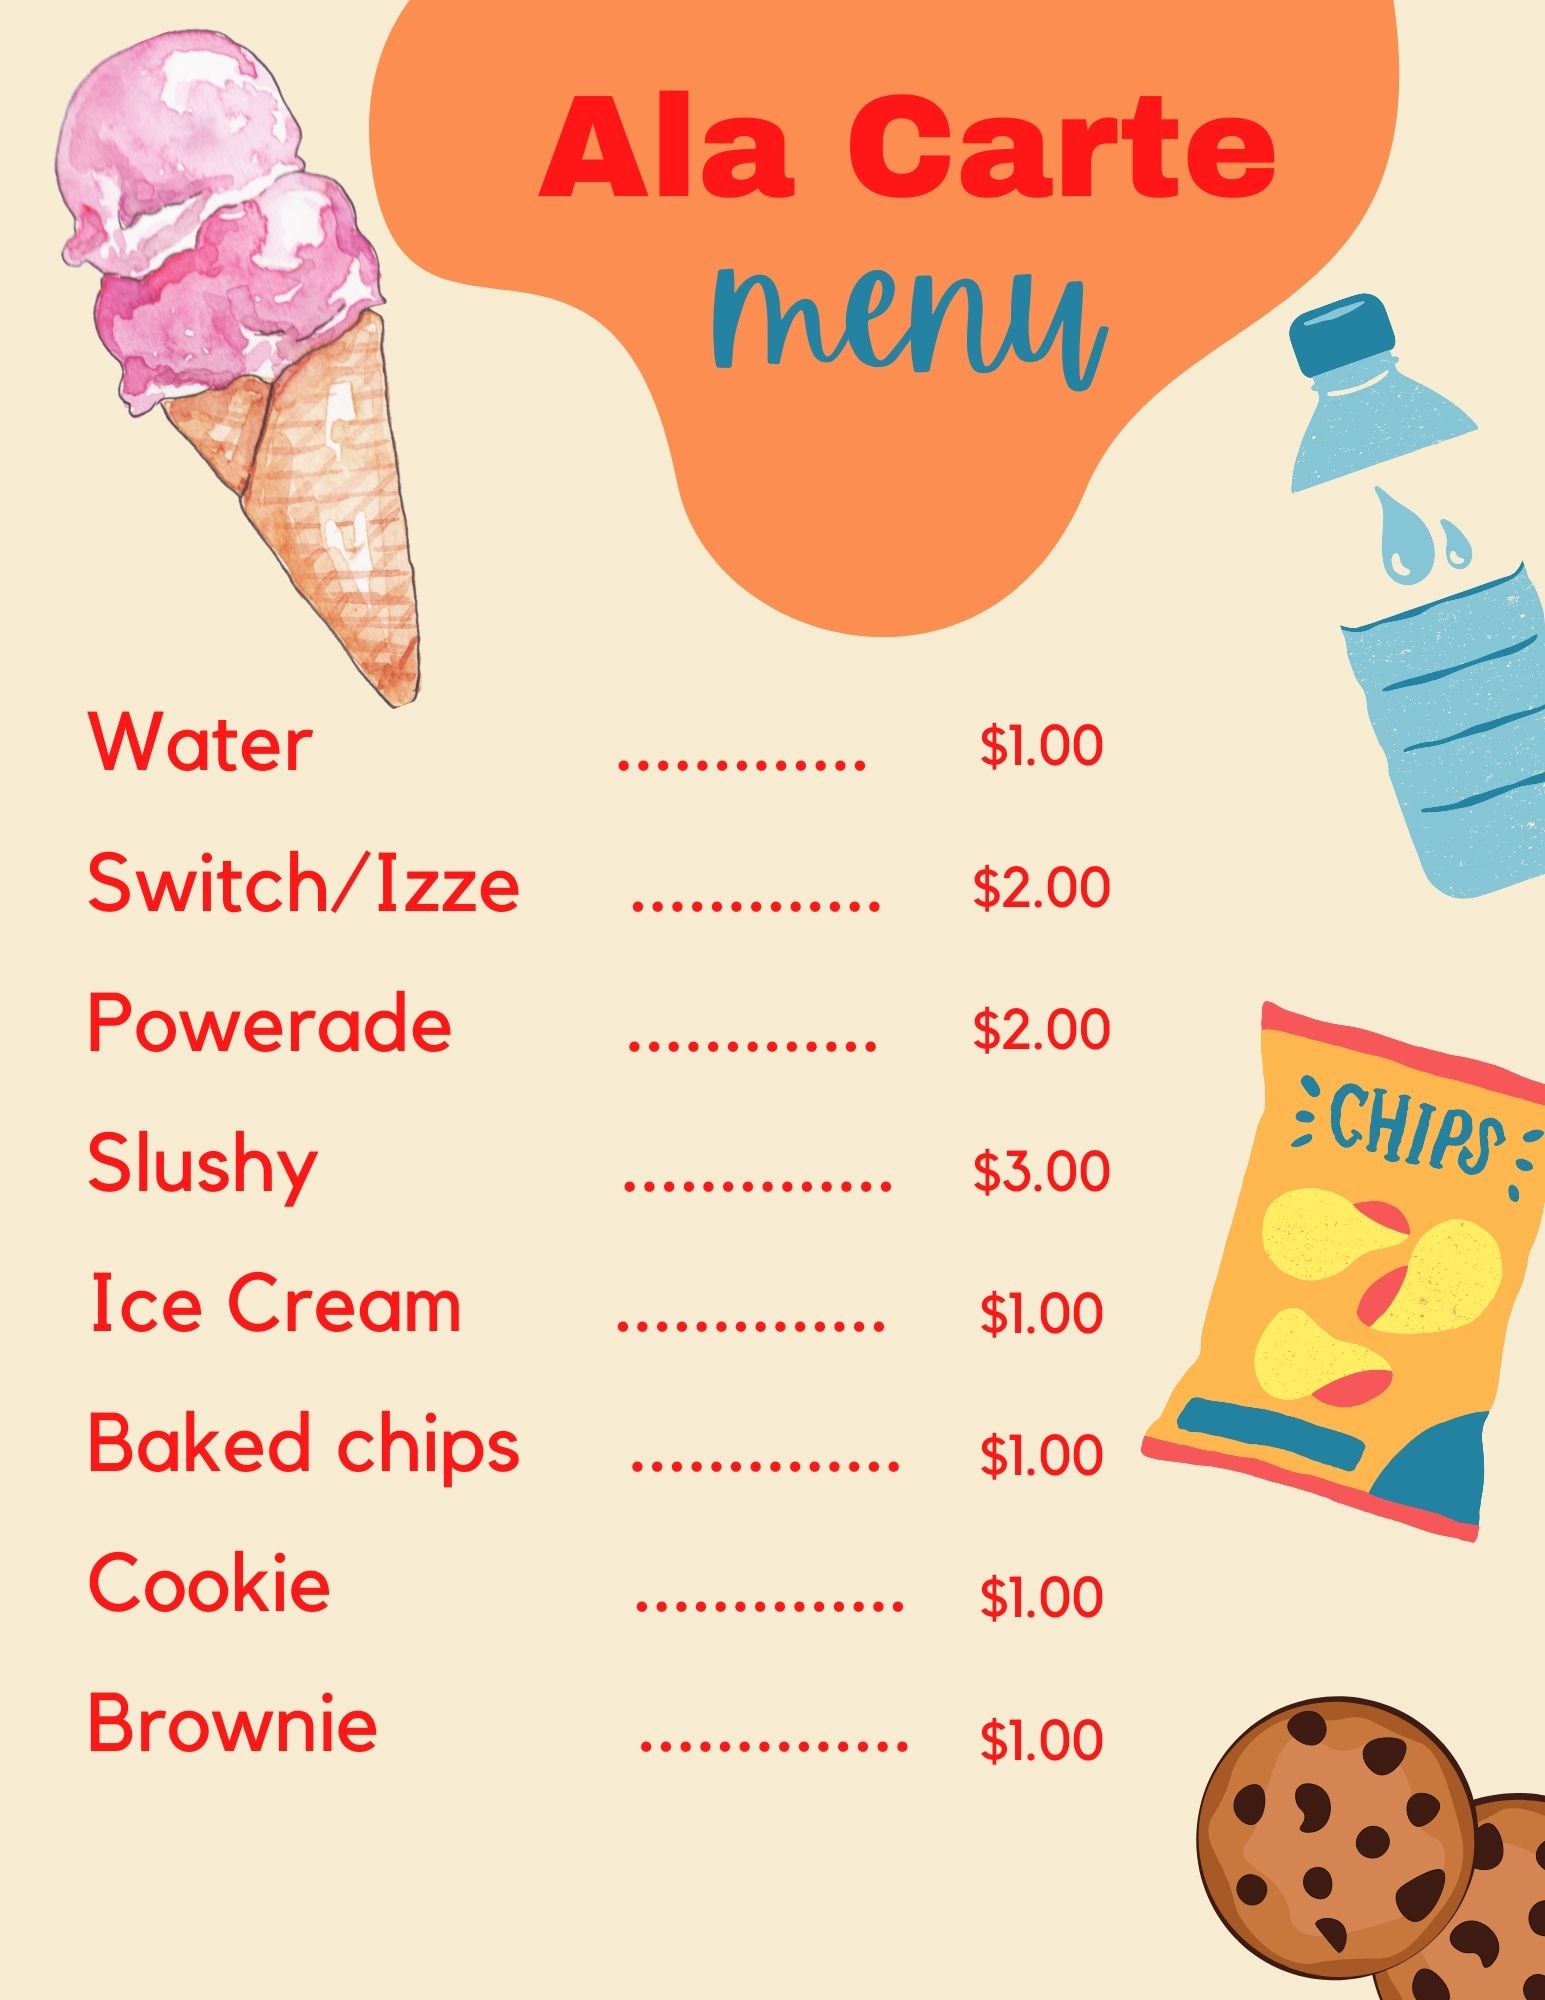 Ala Carte Menu: Water $1, Switch/Izze $2, Powerade $2, Slushy $3, Ice Cream $1, Baked chips $1, Cookie $1, Brownie $1